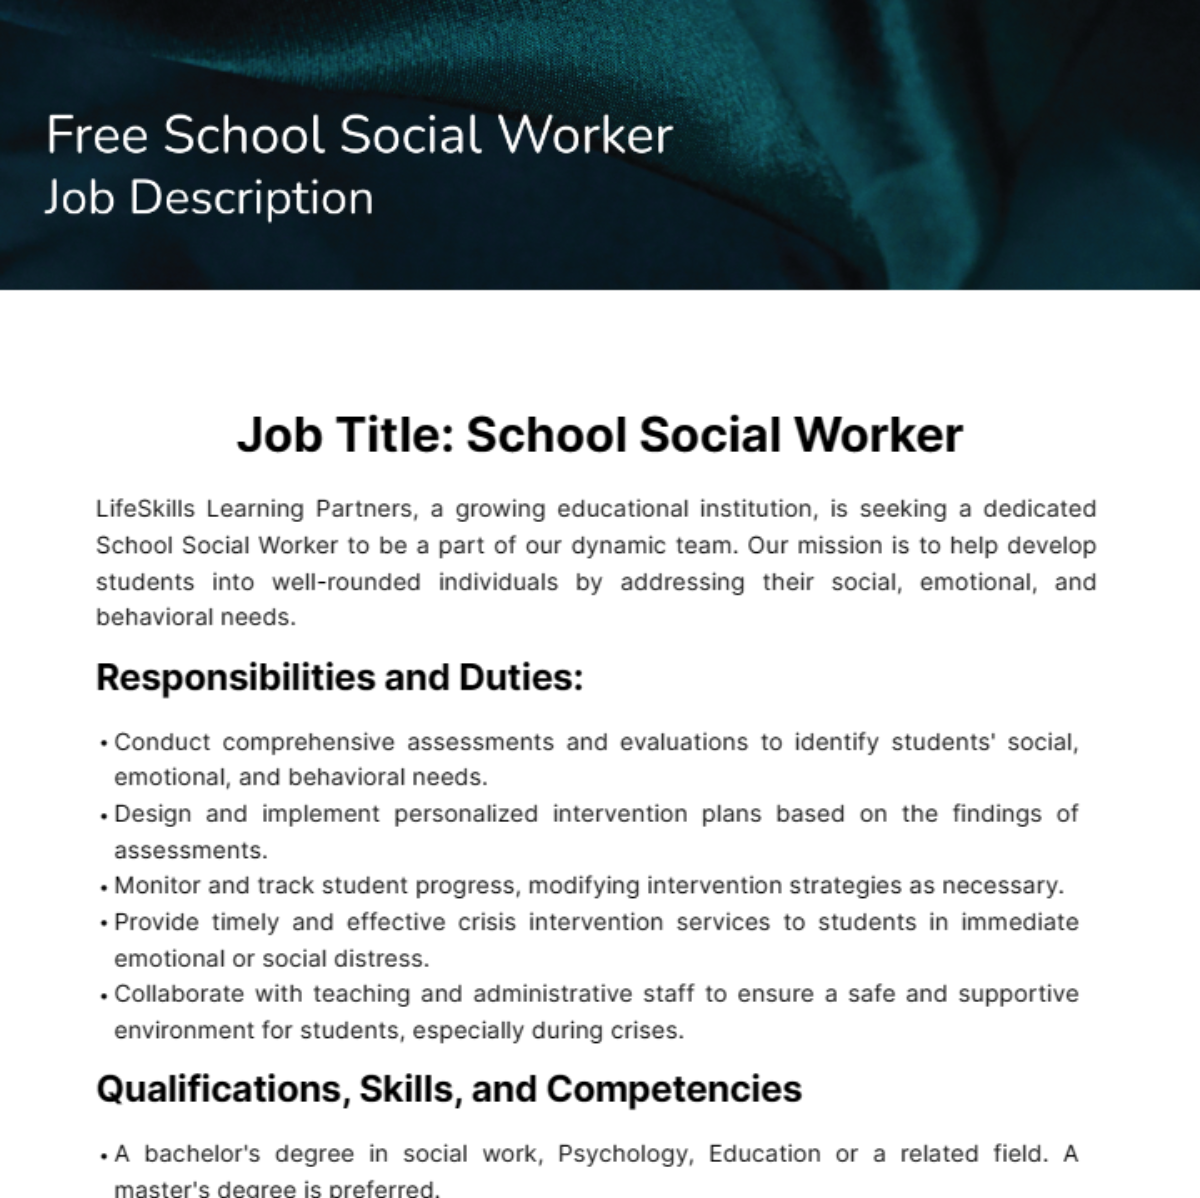 Free School Social Worker Job Description Template